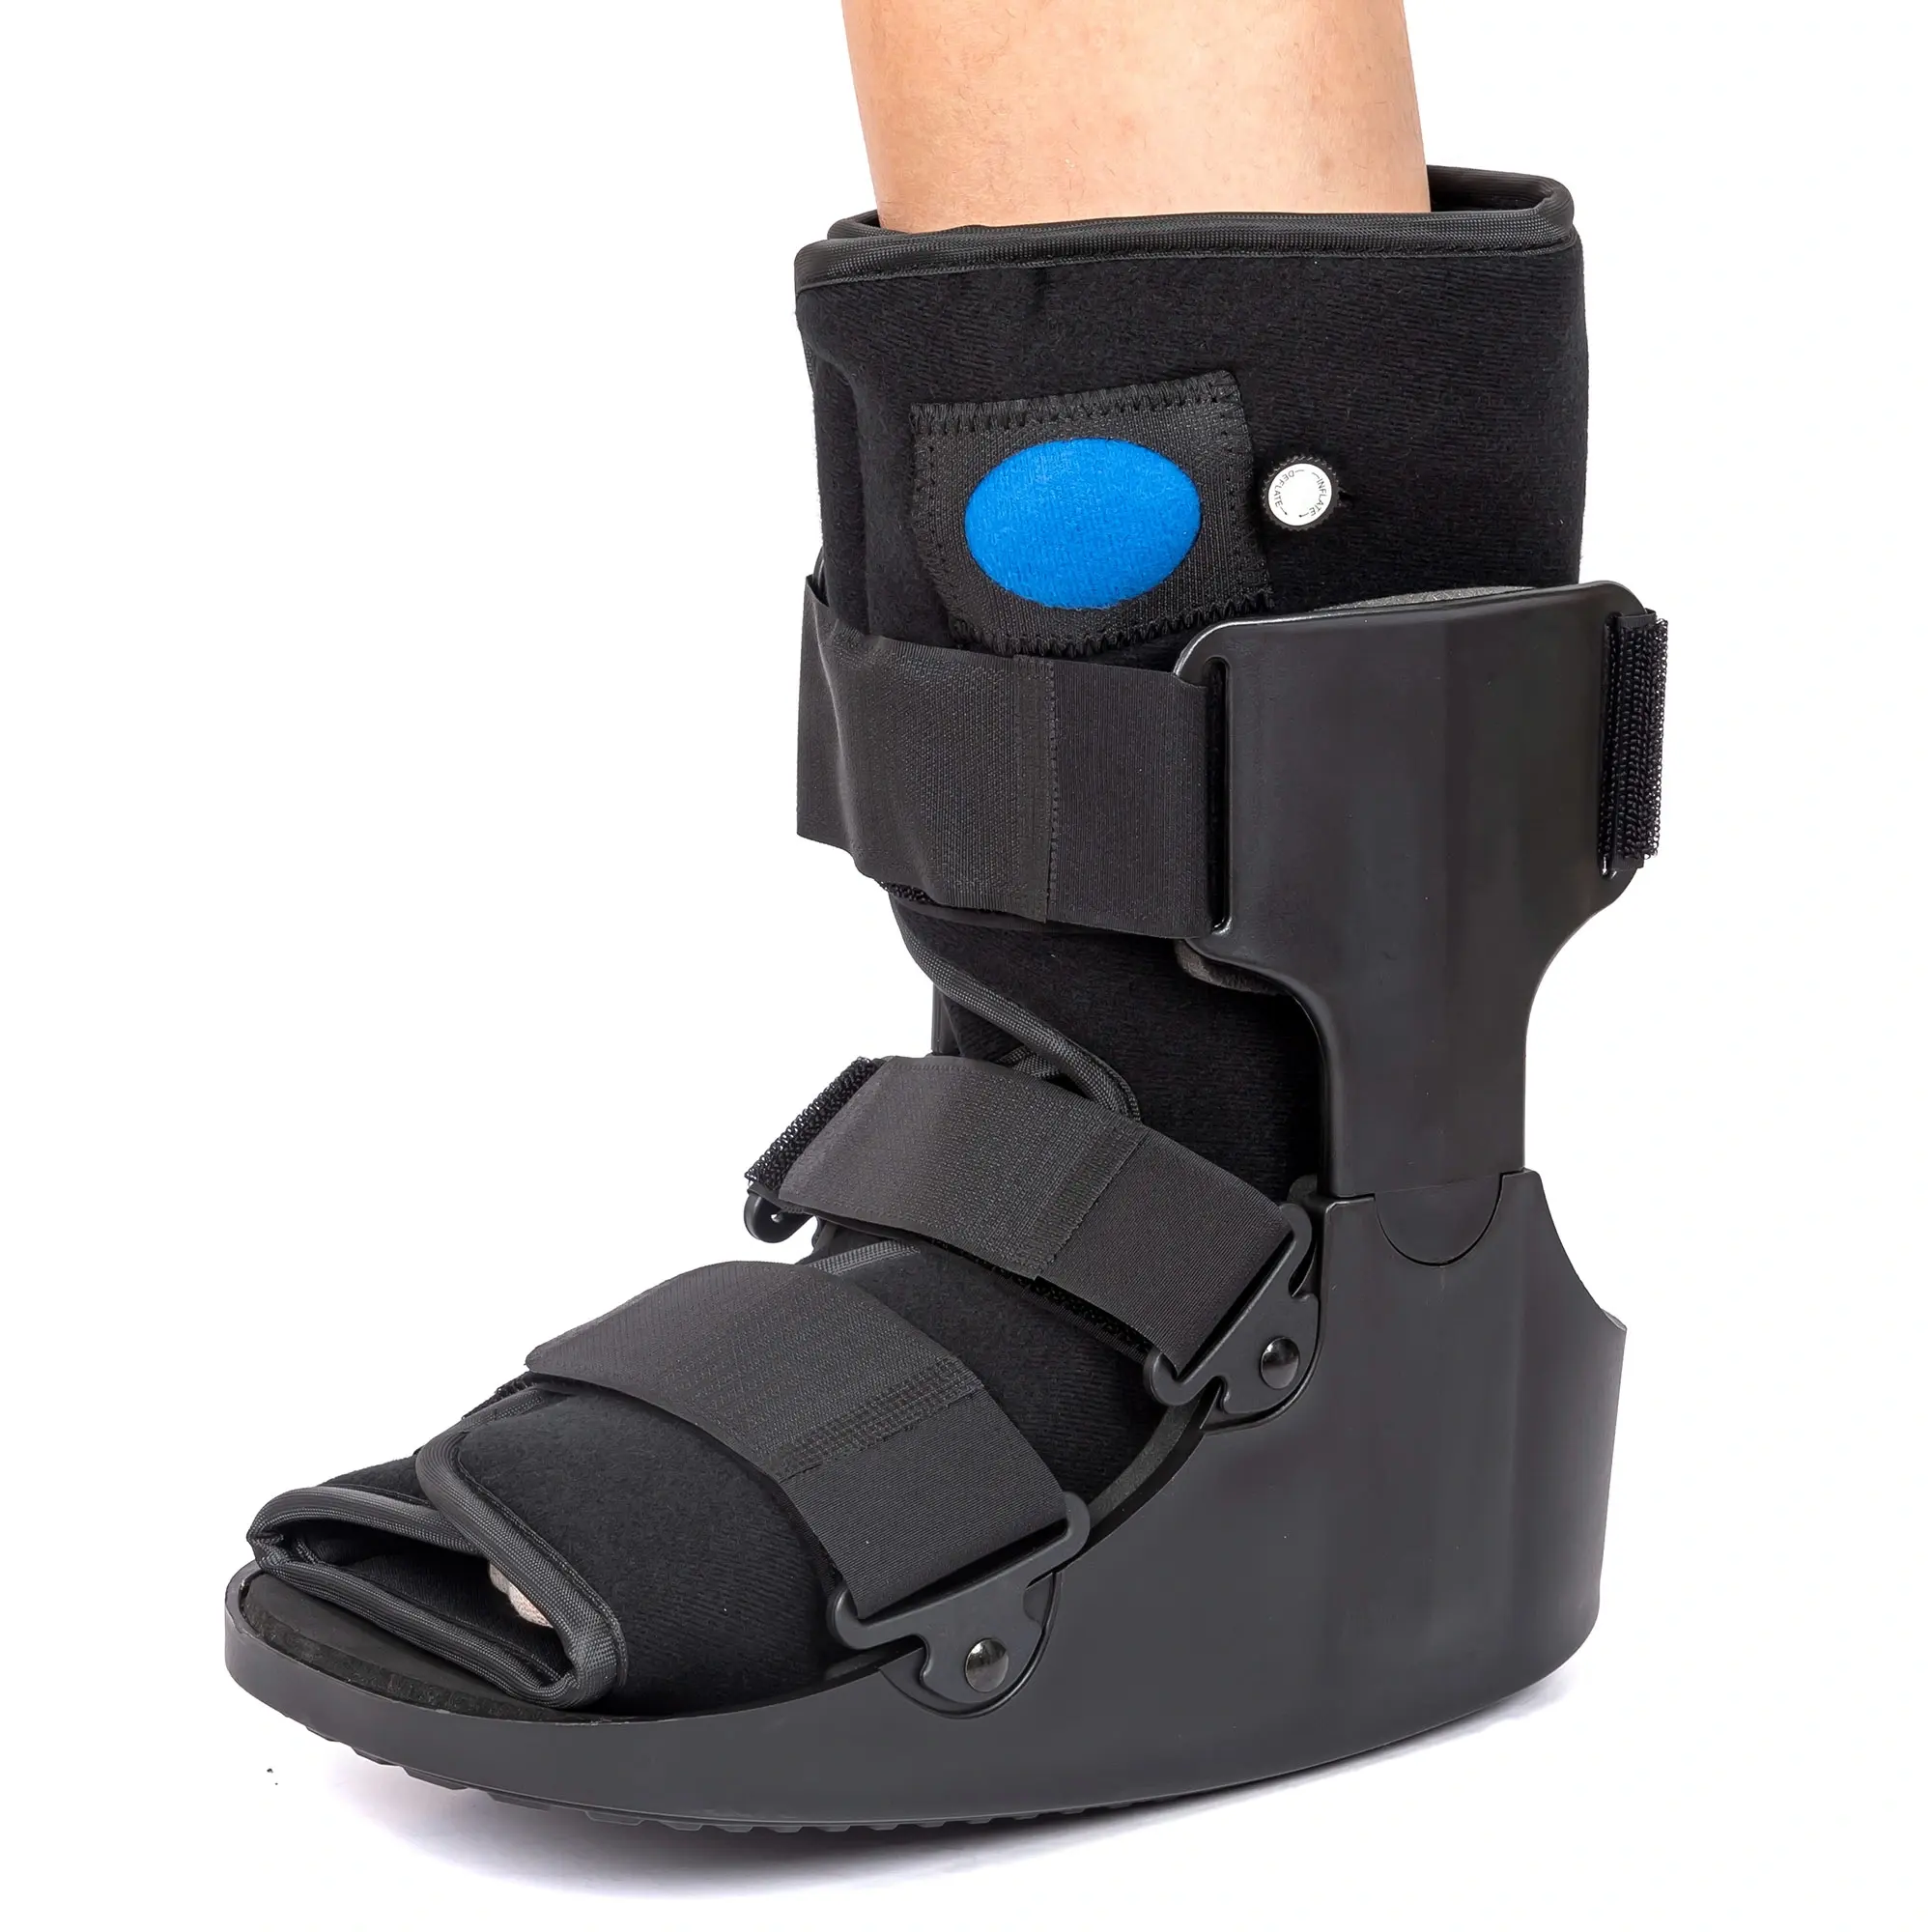 Cura della salute riabilitazione boot walker frattura ortopedica air walker boot post op medical aircast walking boot